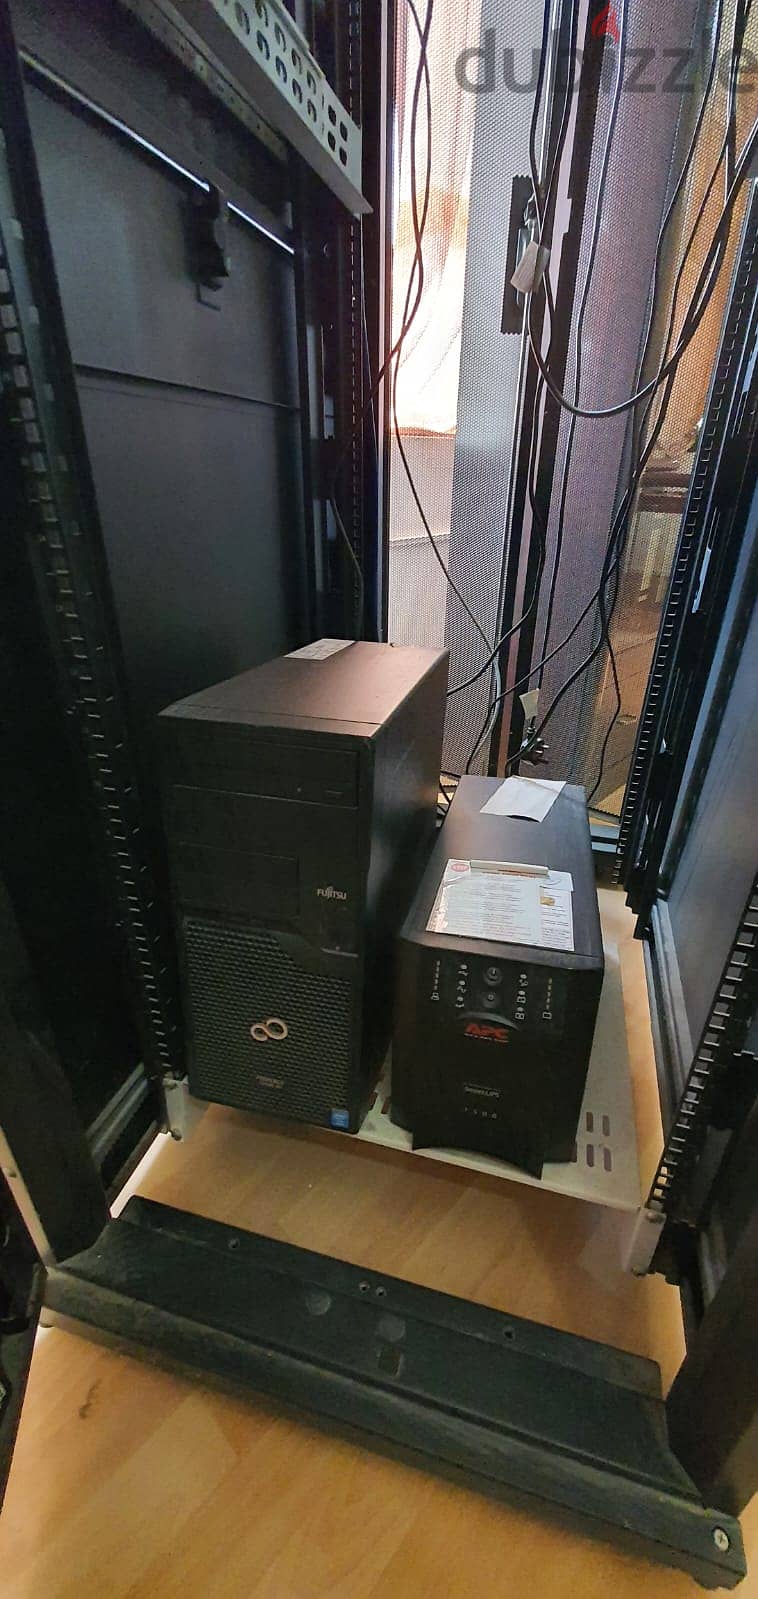 Server Cabinet (APC) | Computers (Fujitsu)  | Printers 5